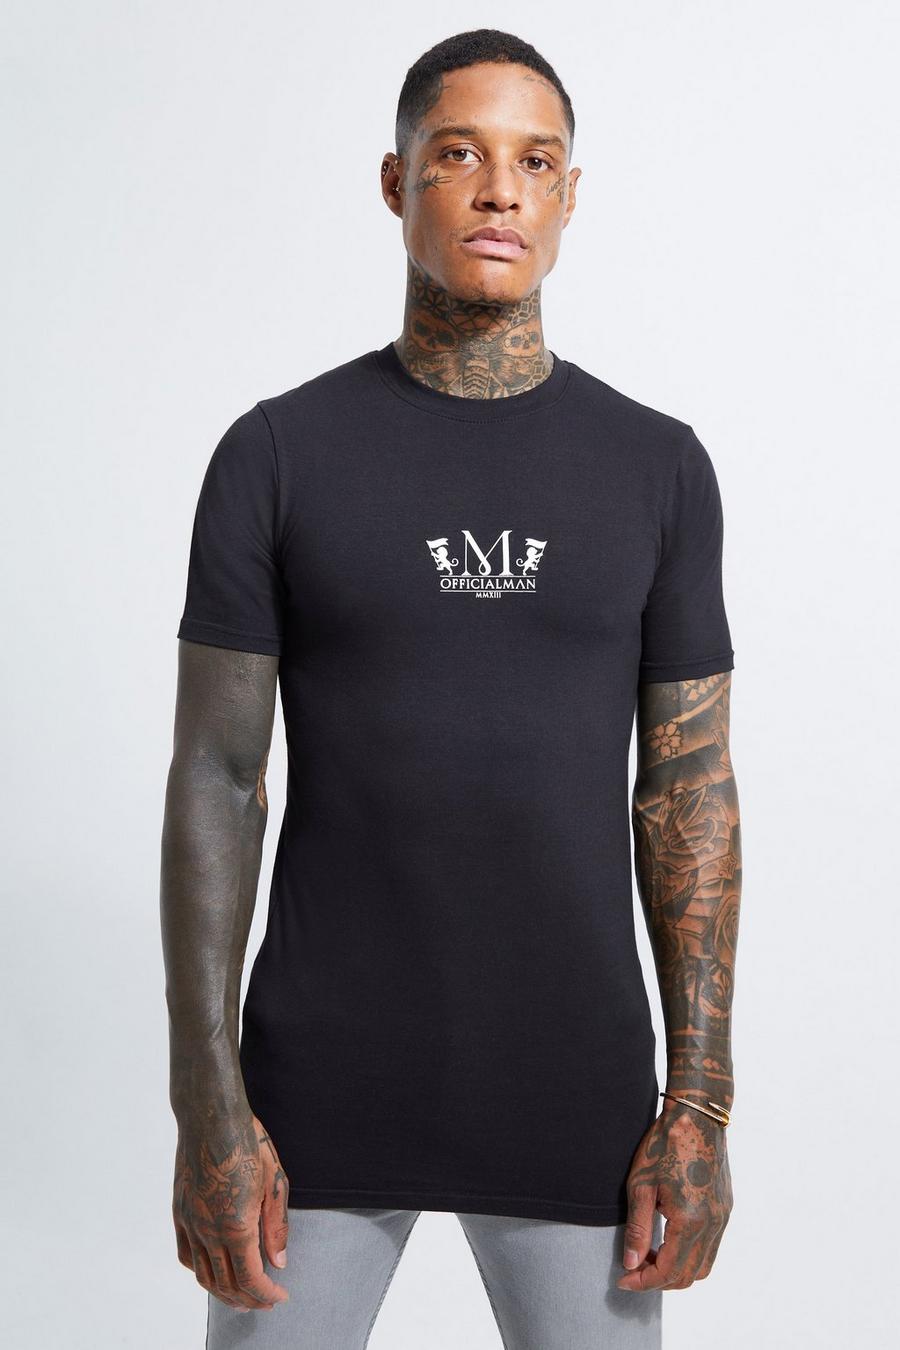 Black Long Line Muscle Fit Offical T-Shirt Met Print